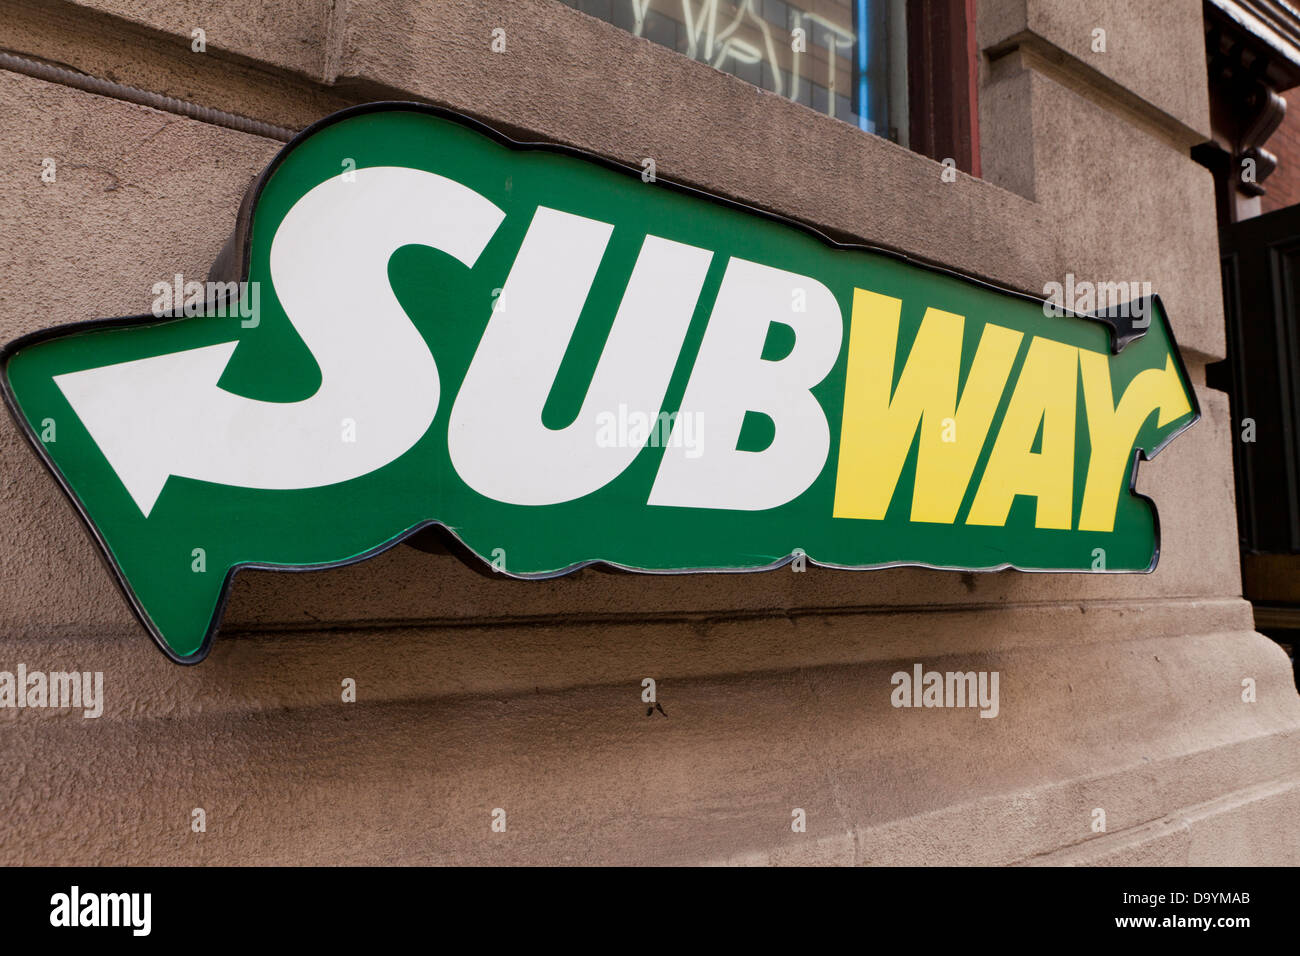 Restaurant Subway sign - USA Banque D'Images